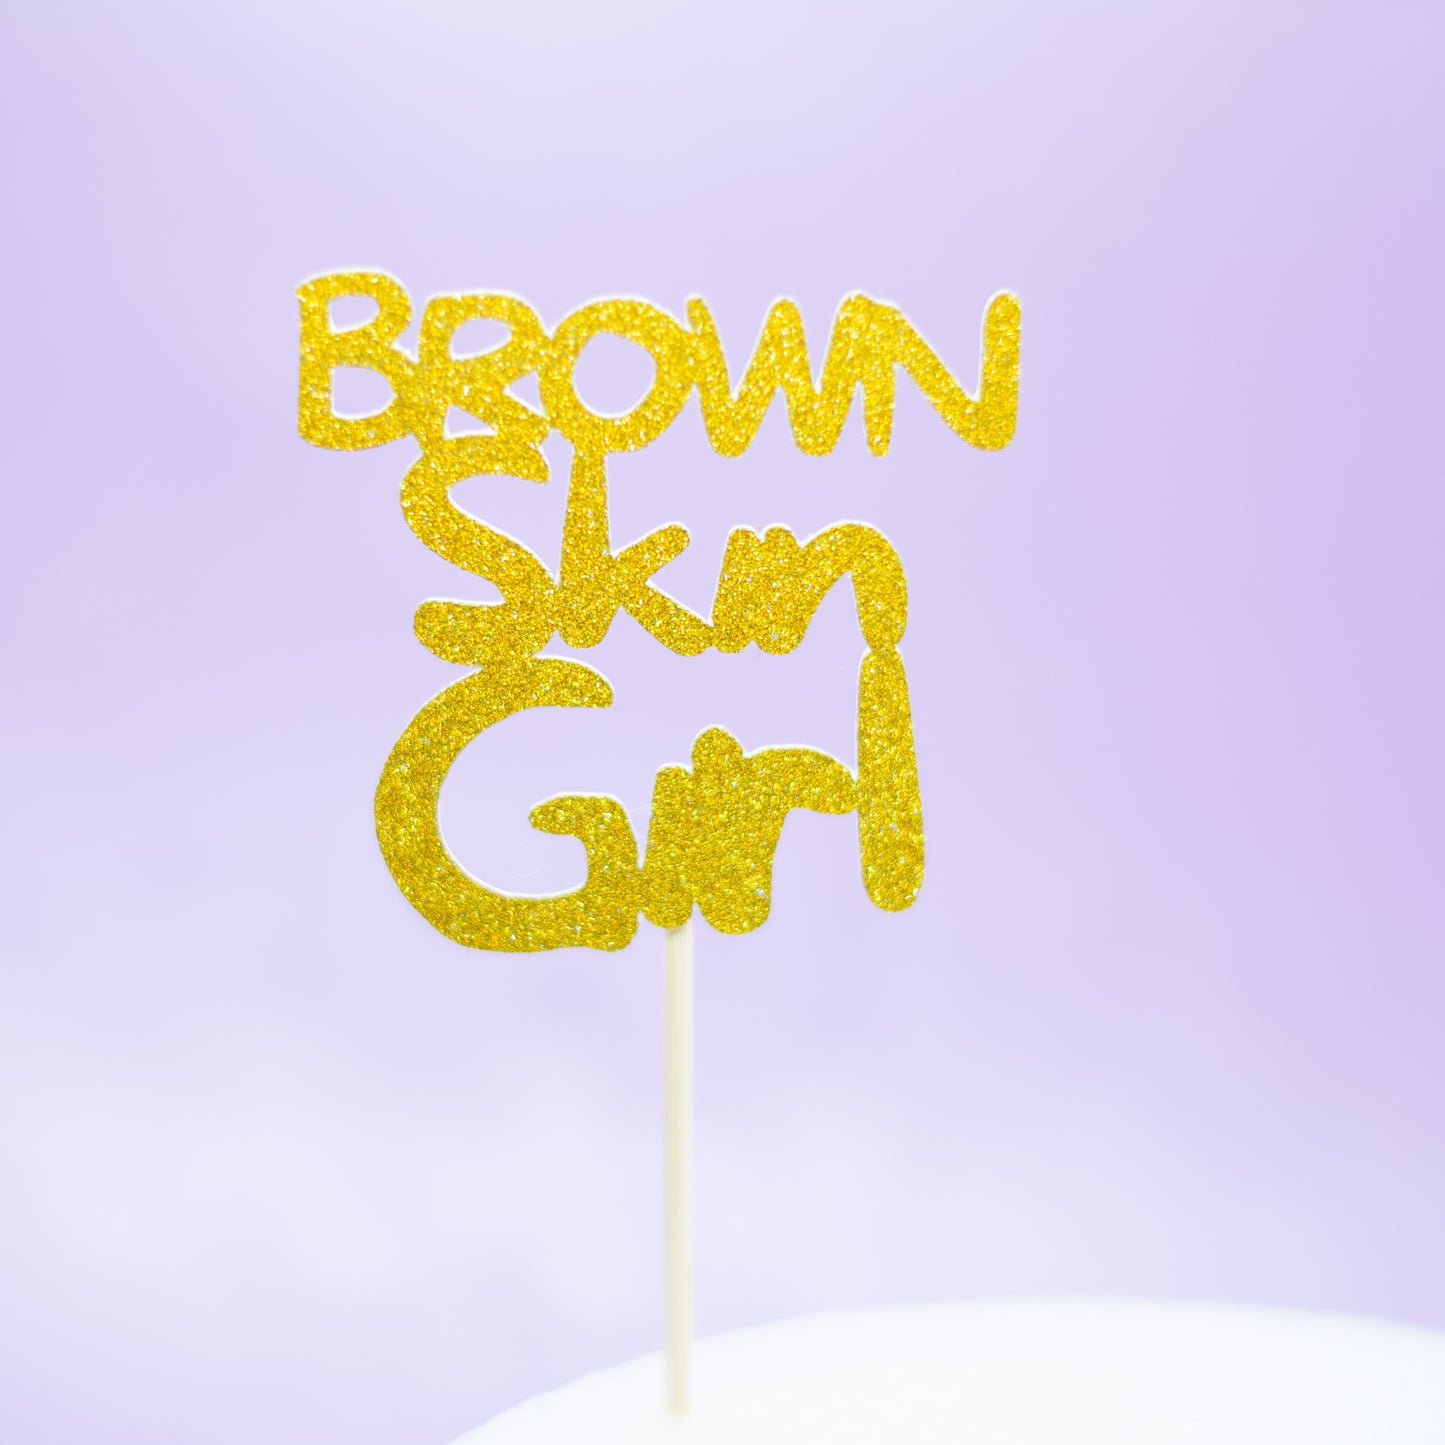 Brown Skin Girl Cupcake Toppers